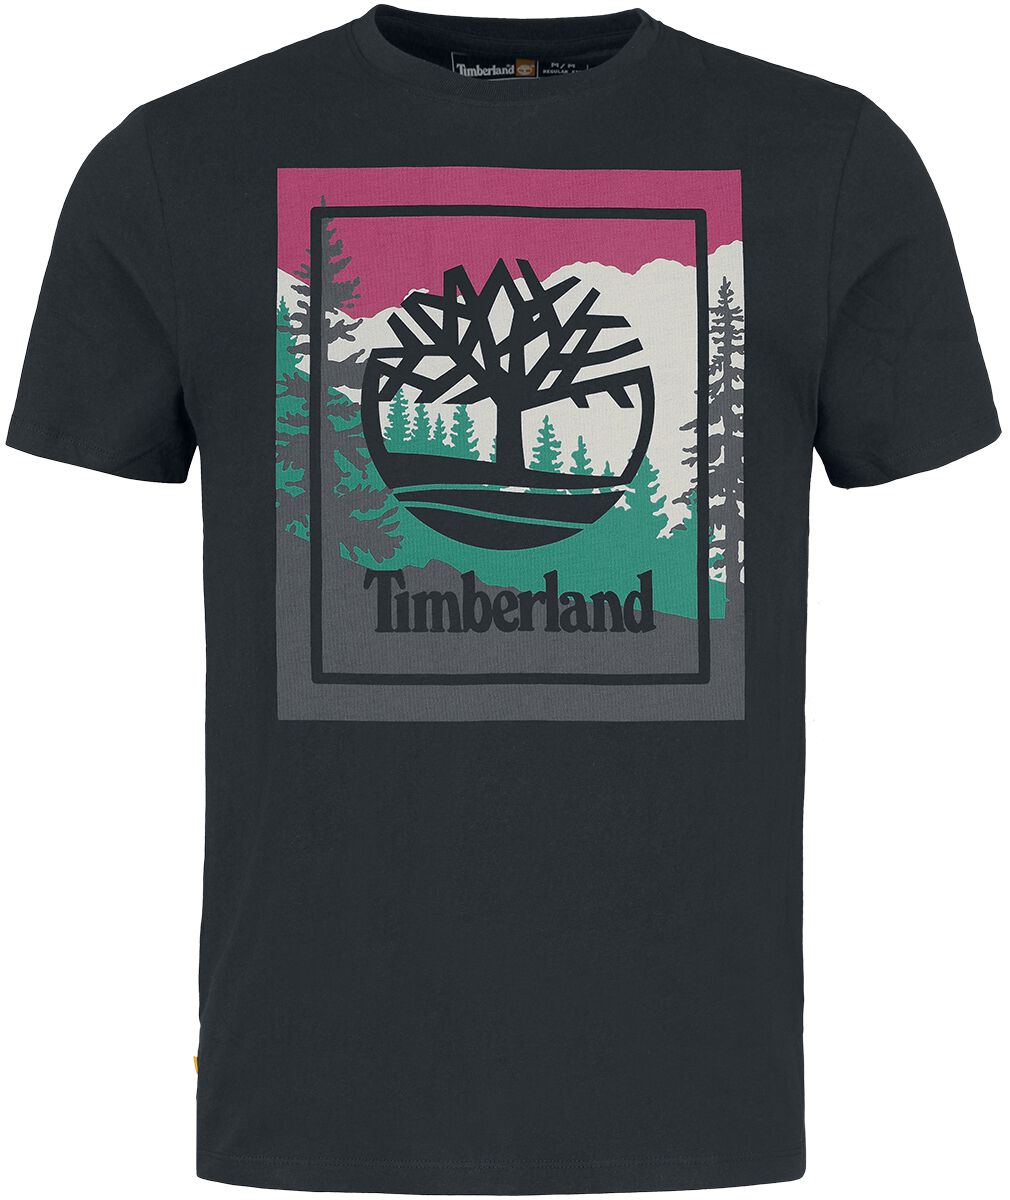 Timberland Outdoor Inspired Graphic Tee T-Shirt schwarz in M